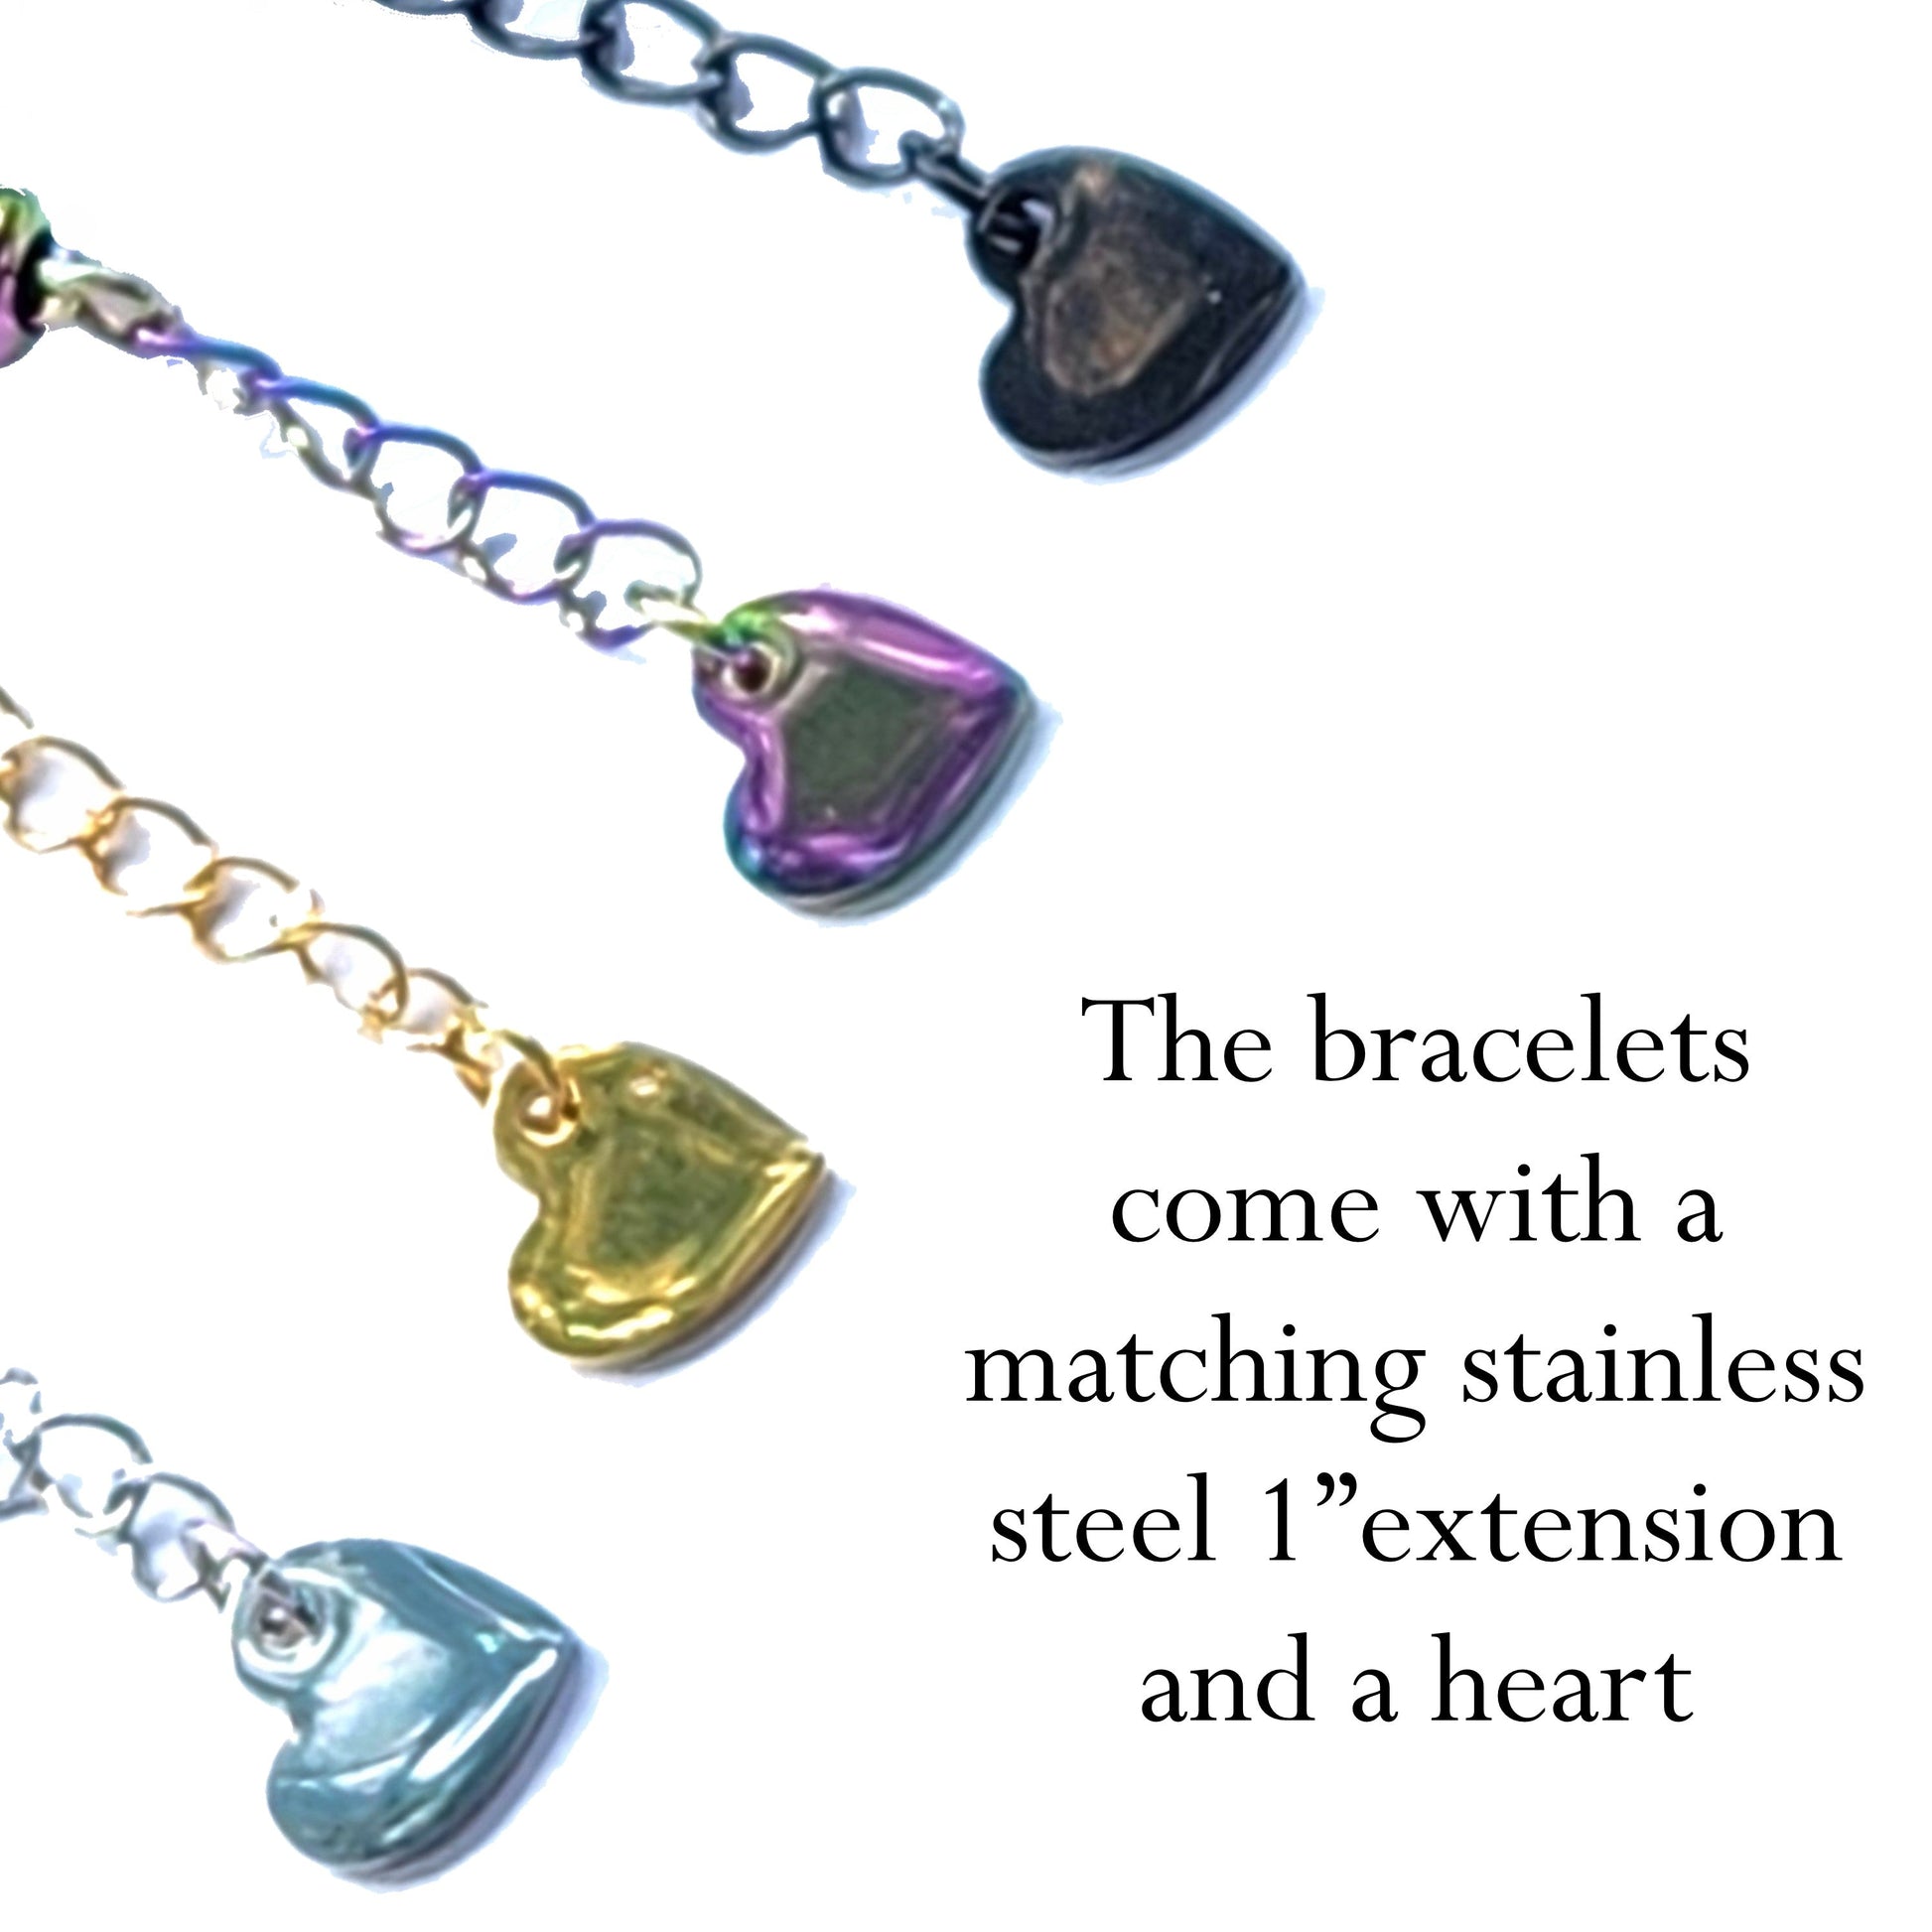 Eternal Cremation Bracelet With 6 Ash Beads - Sky Blue